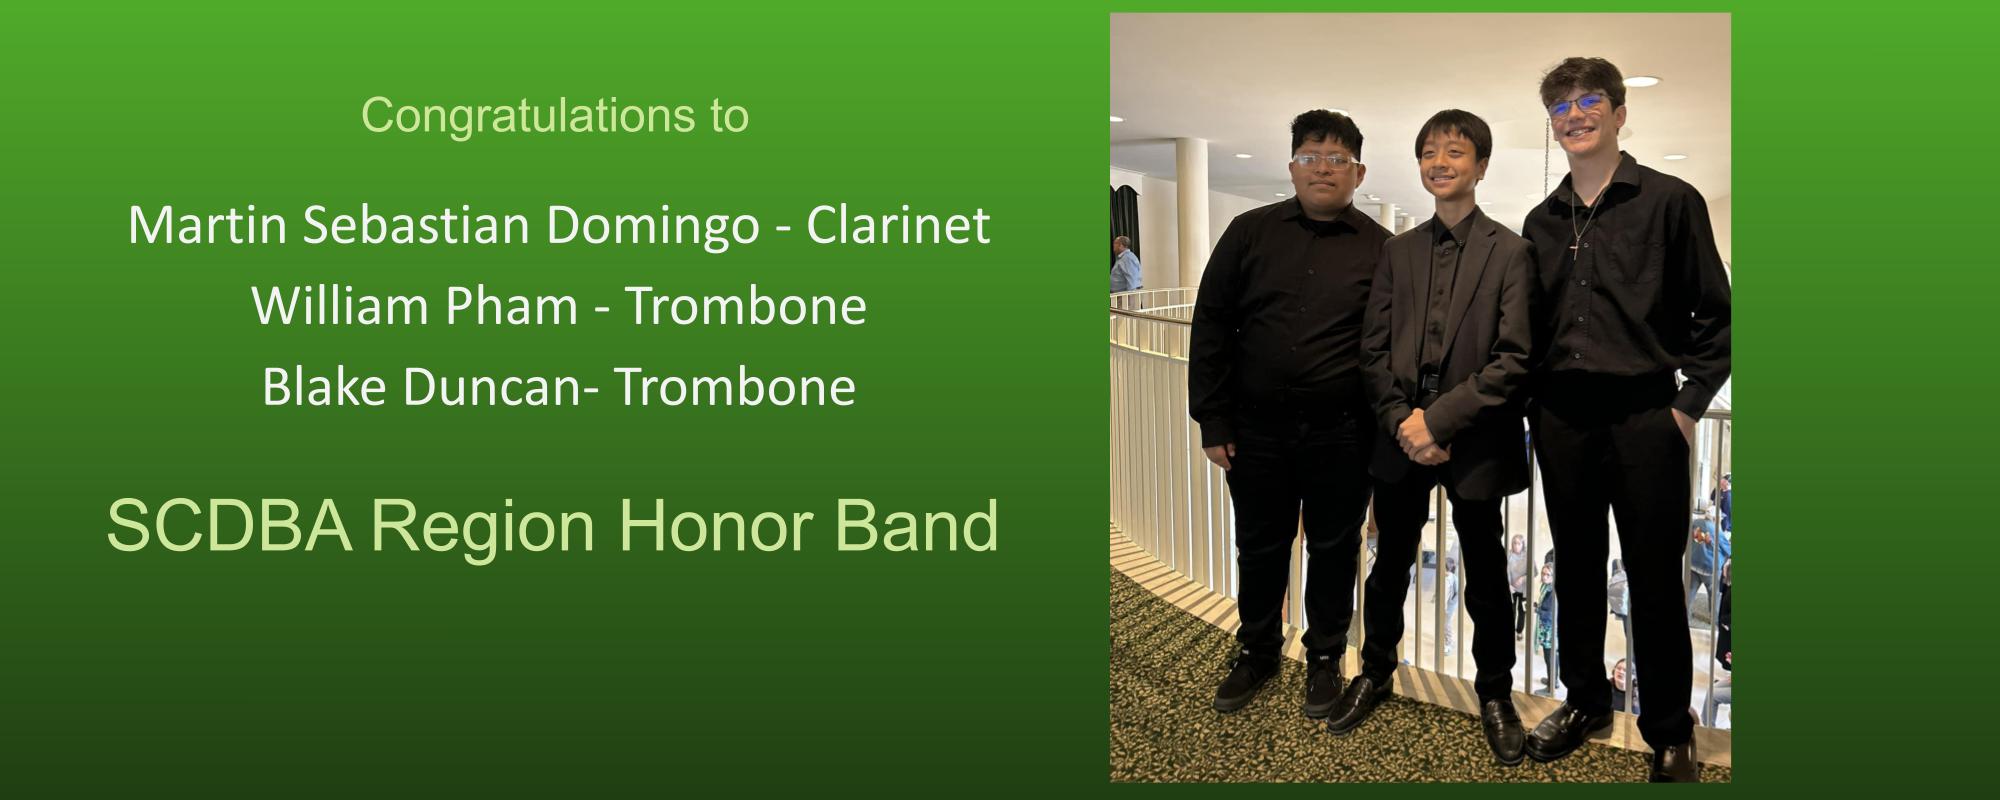 honor band